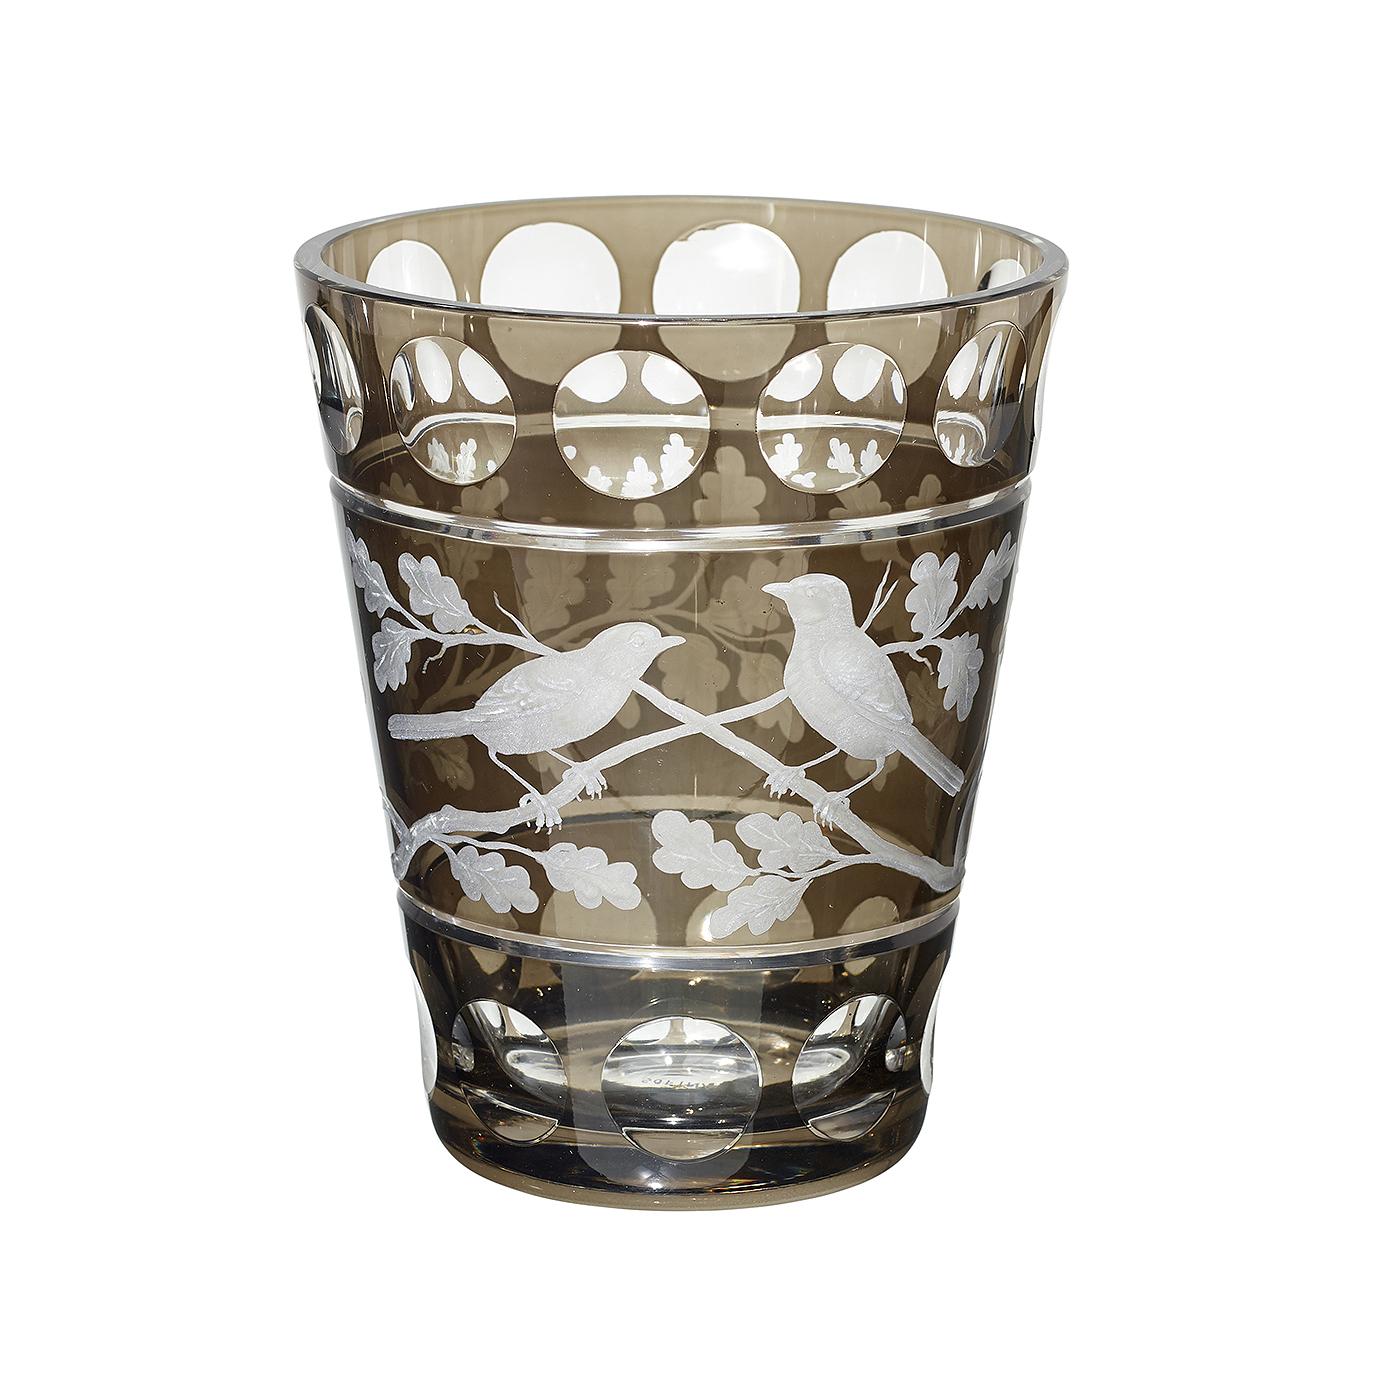 Country Style Crystal Vase Handblown With Birds Decor Sofina Boutique Kitzbühel